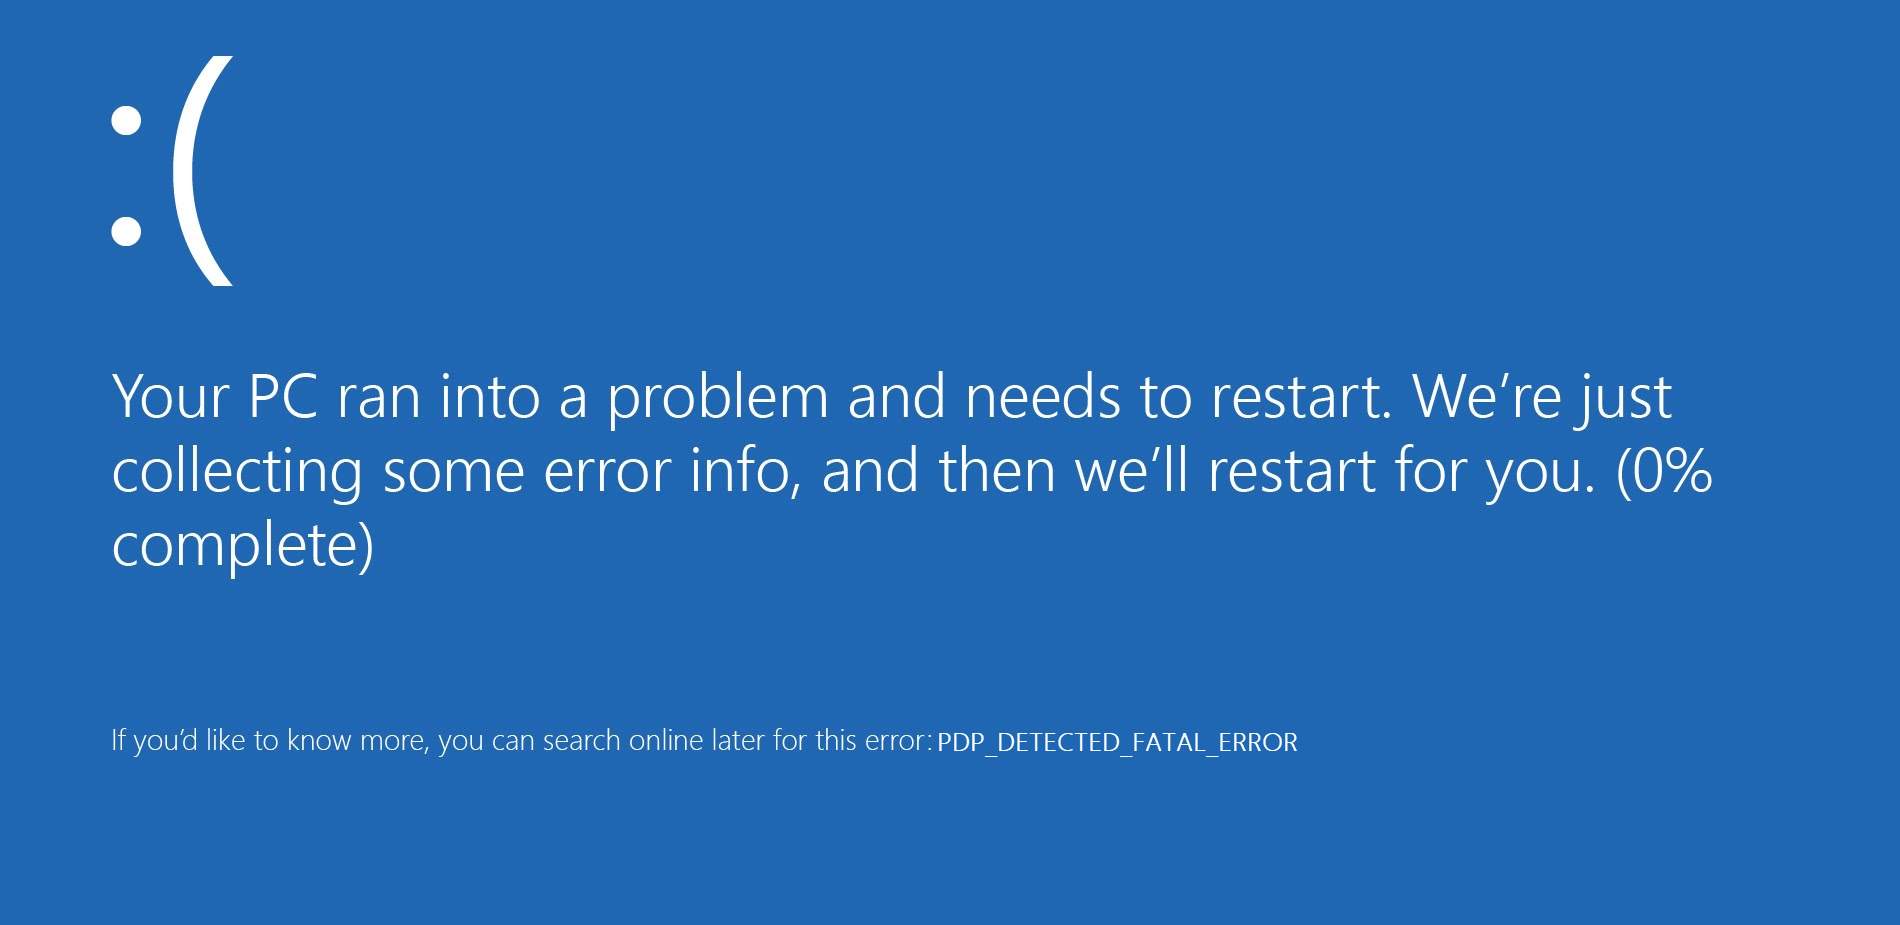 Windows 10 error